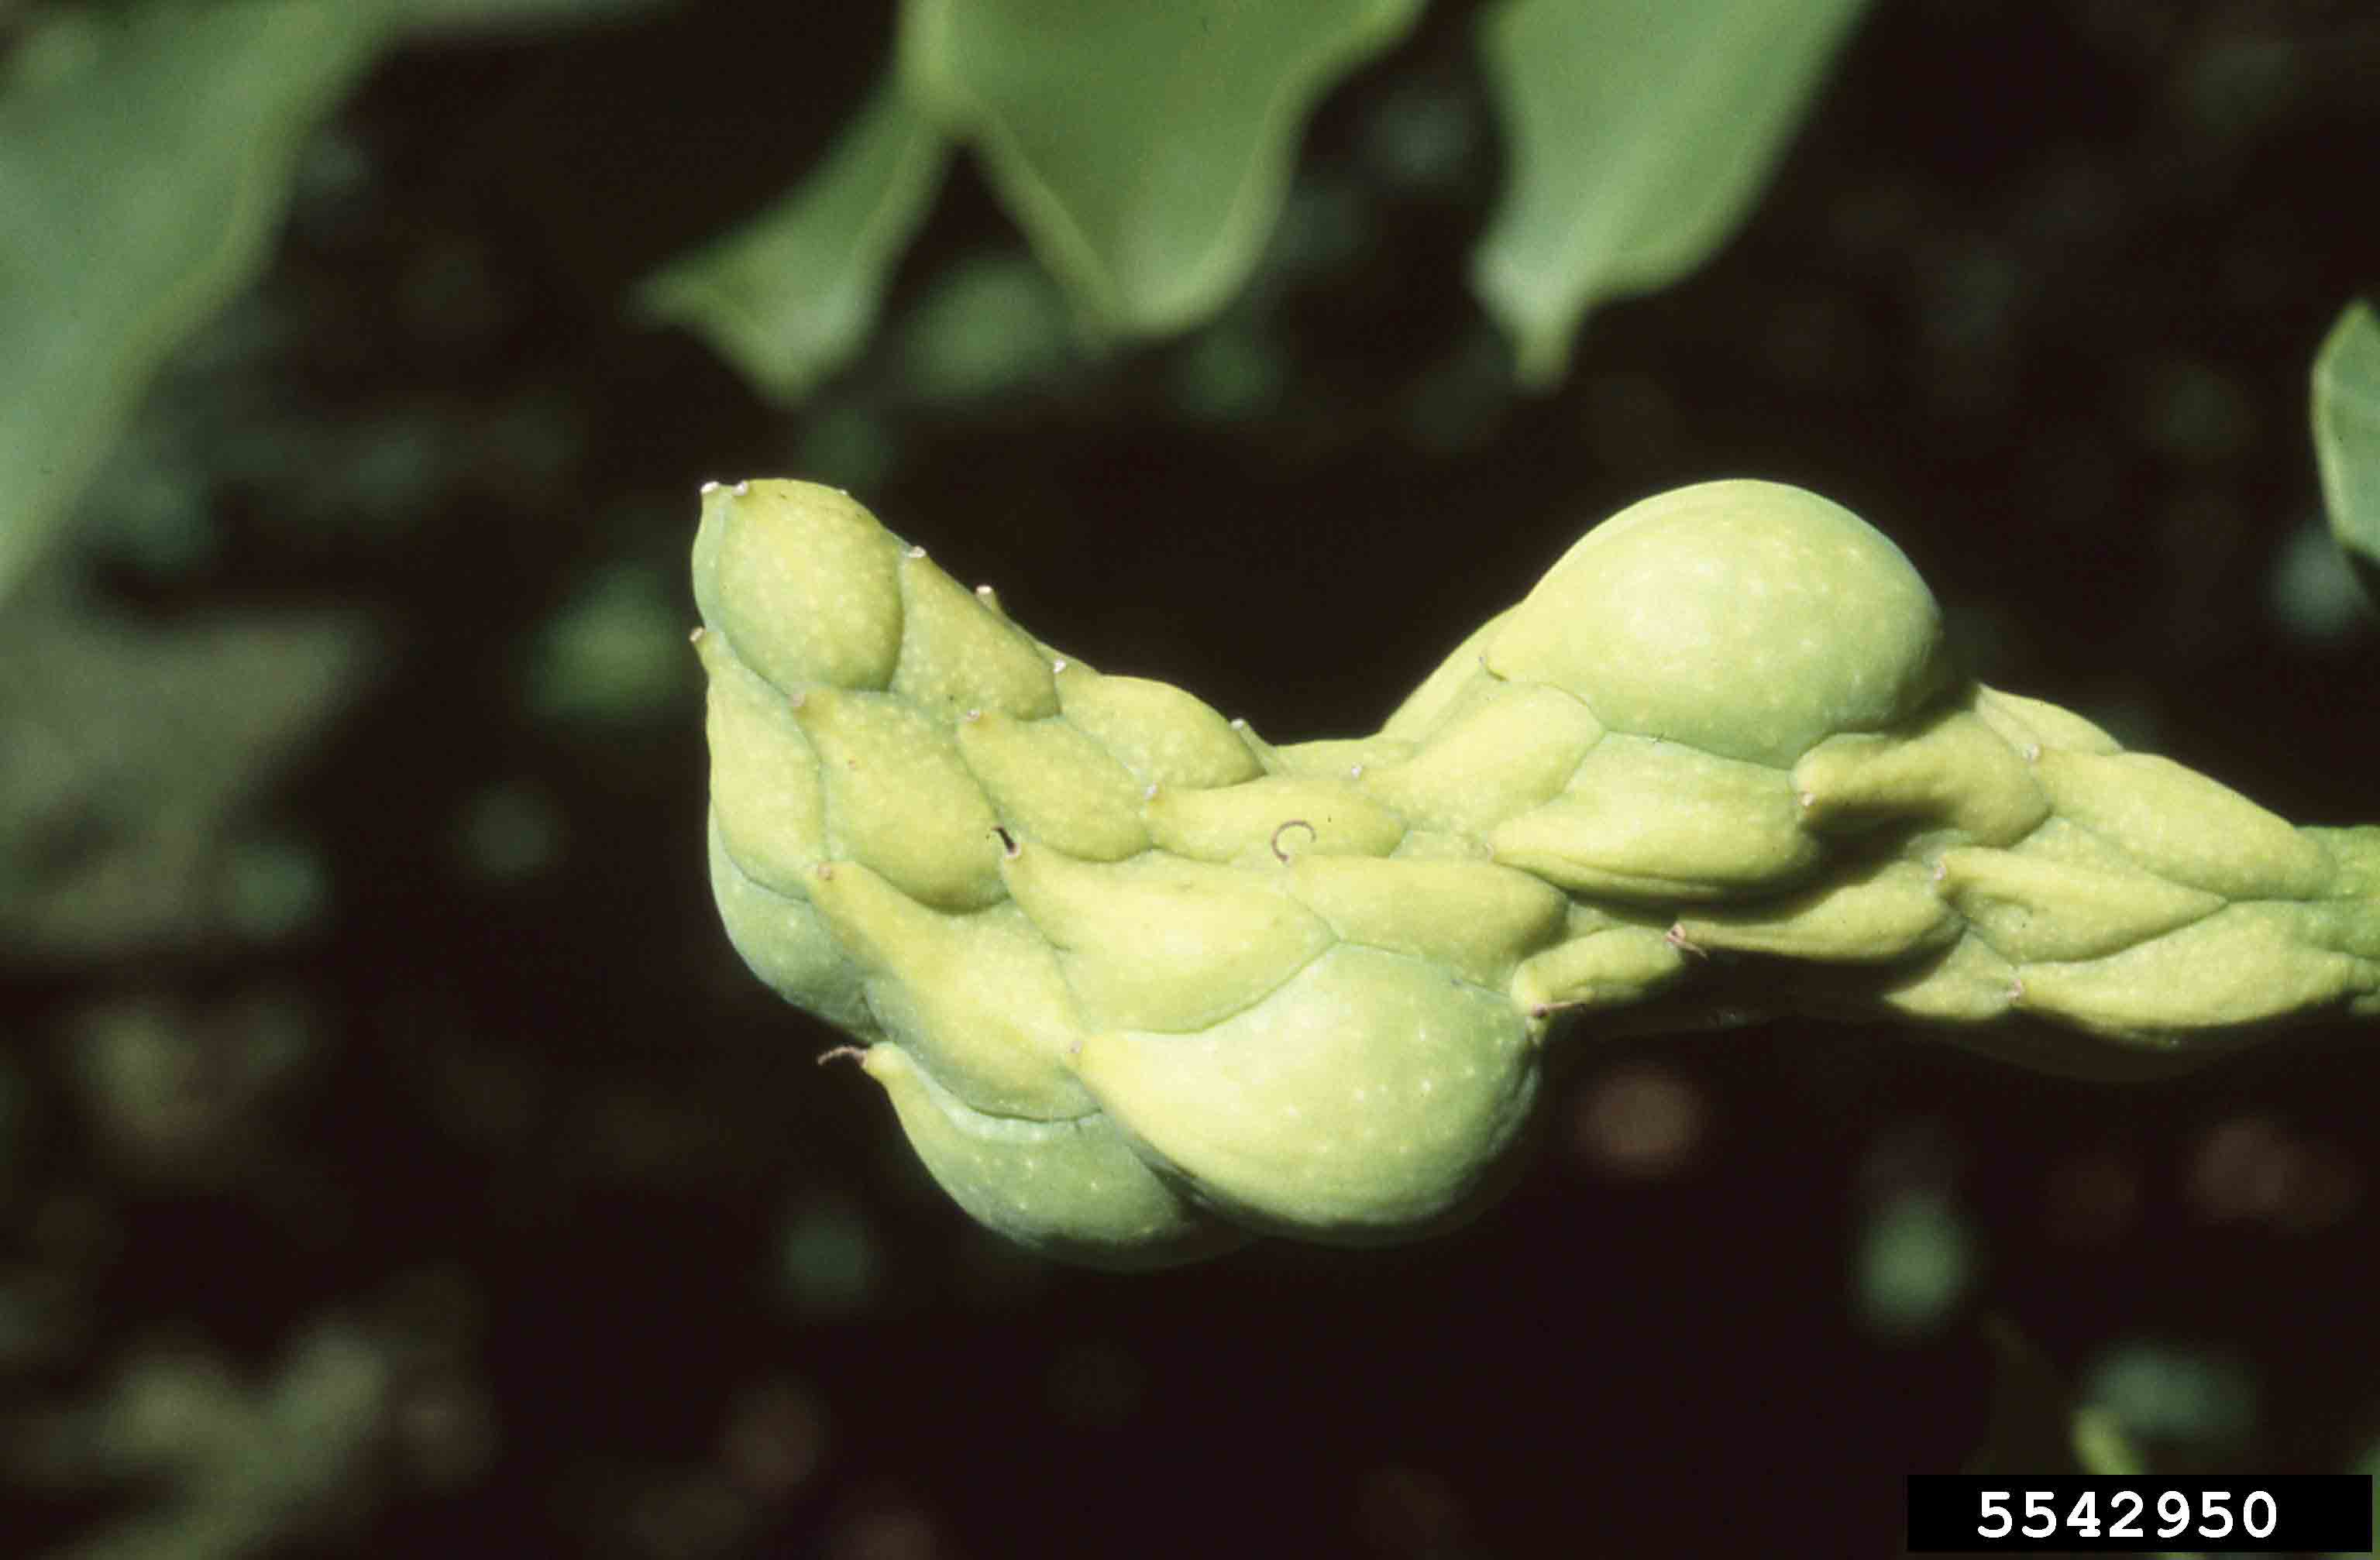 Saucer magnolia fruit